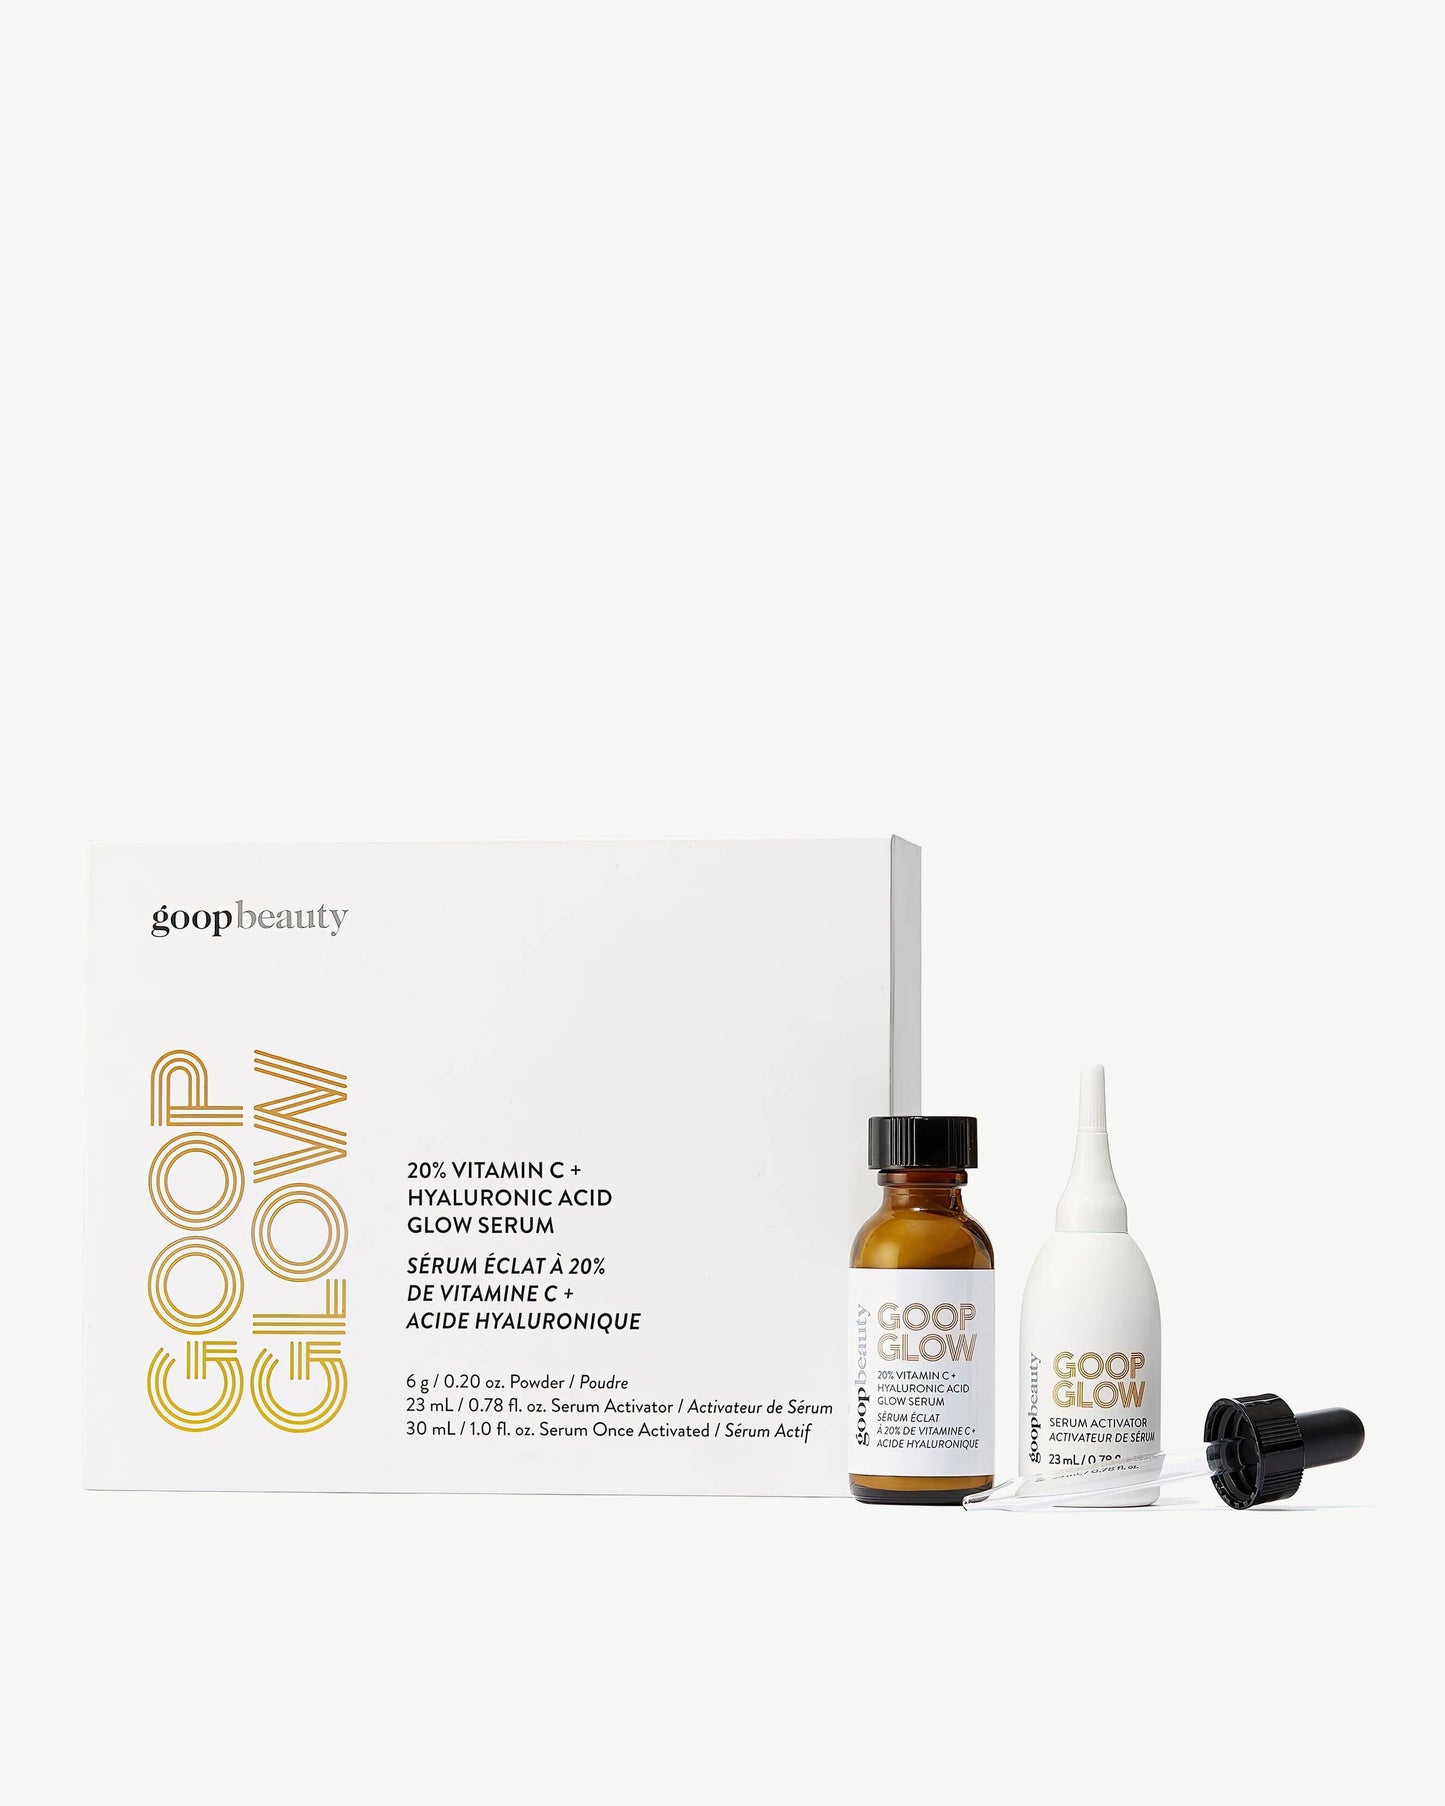 GOOPGLOW 20% Vitamin C + Hyaluronic Glow Serum